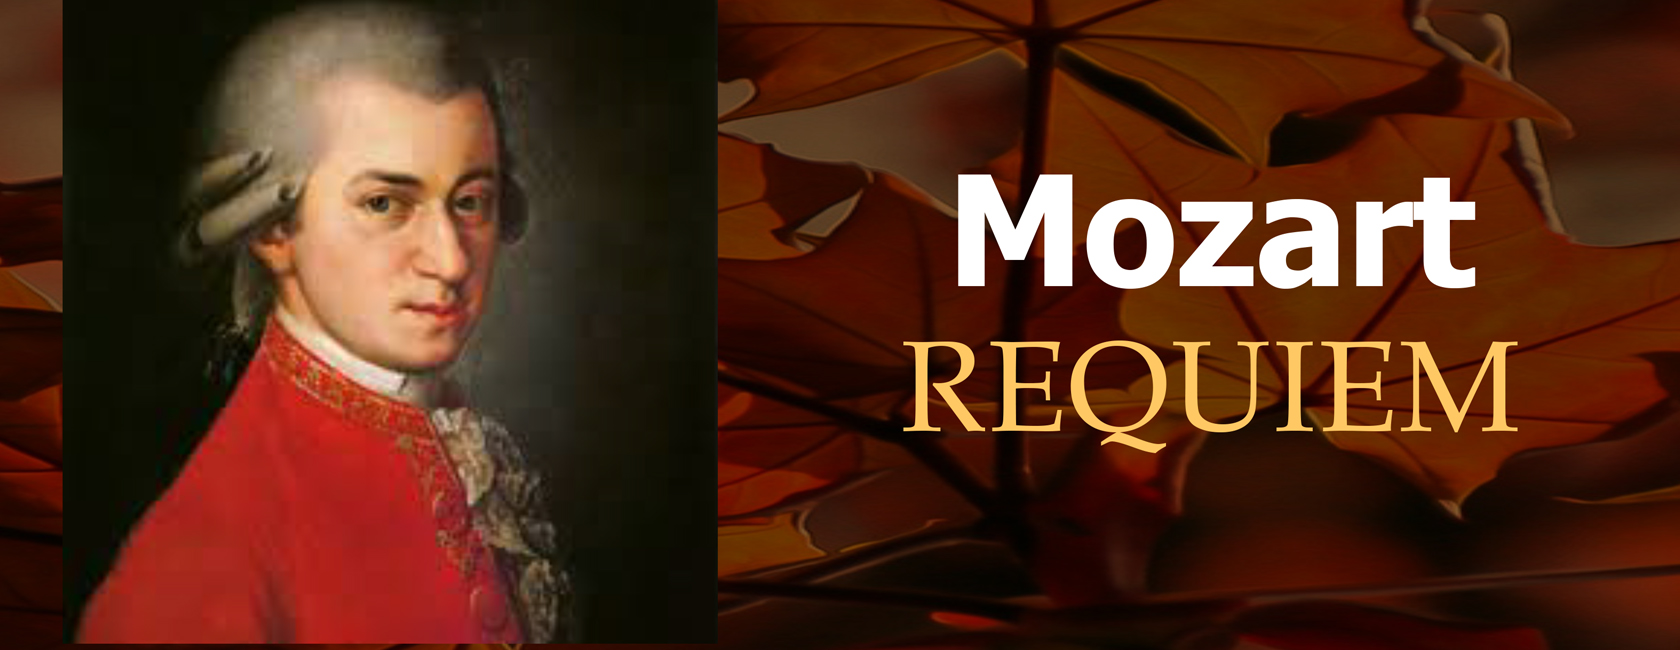 Mozart's Requiem banner